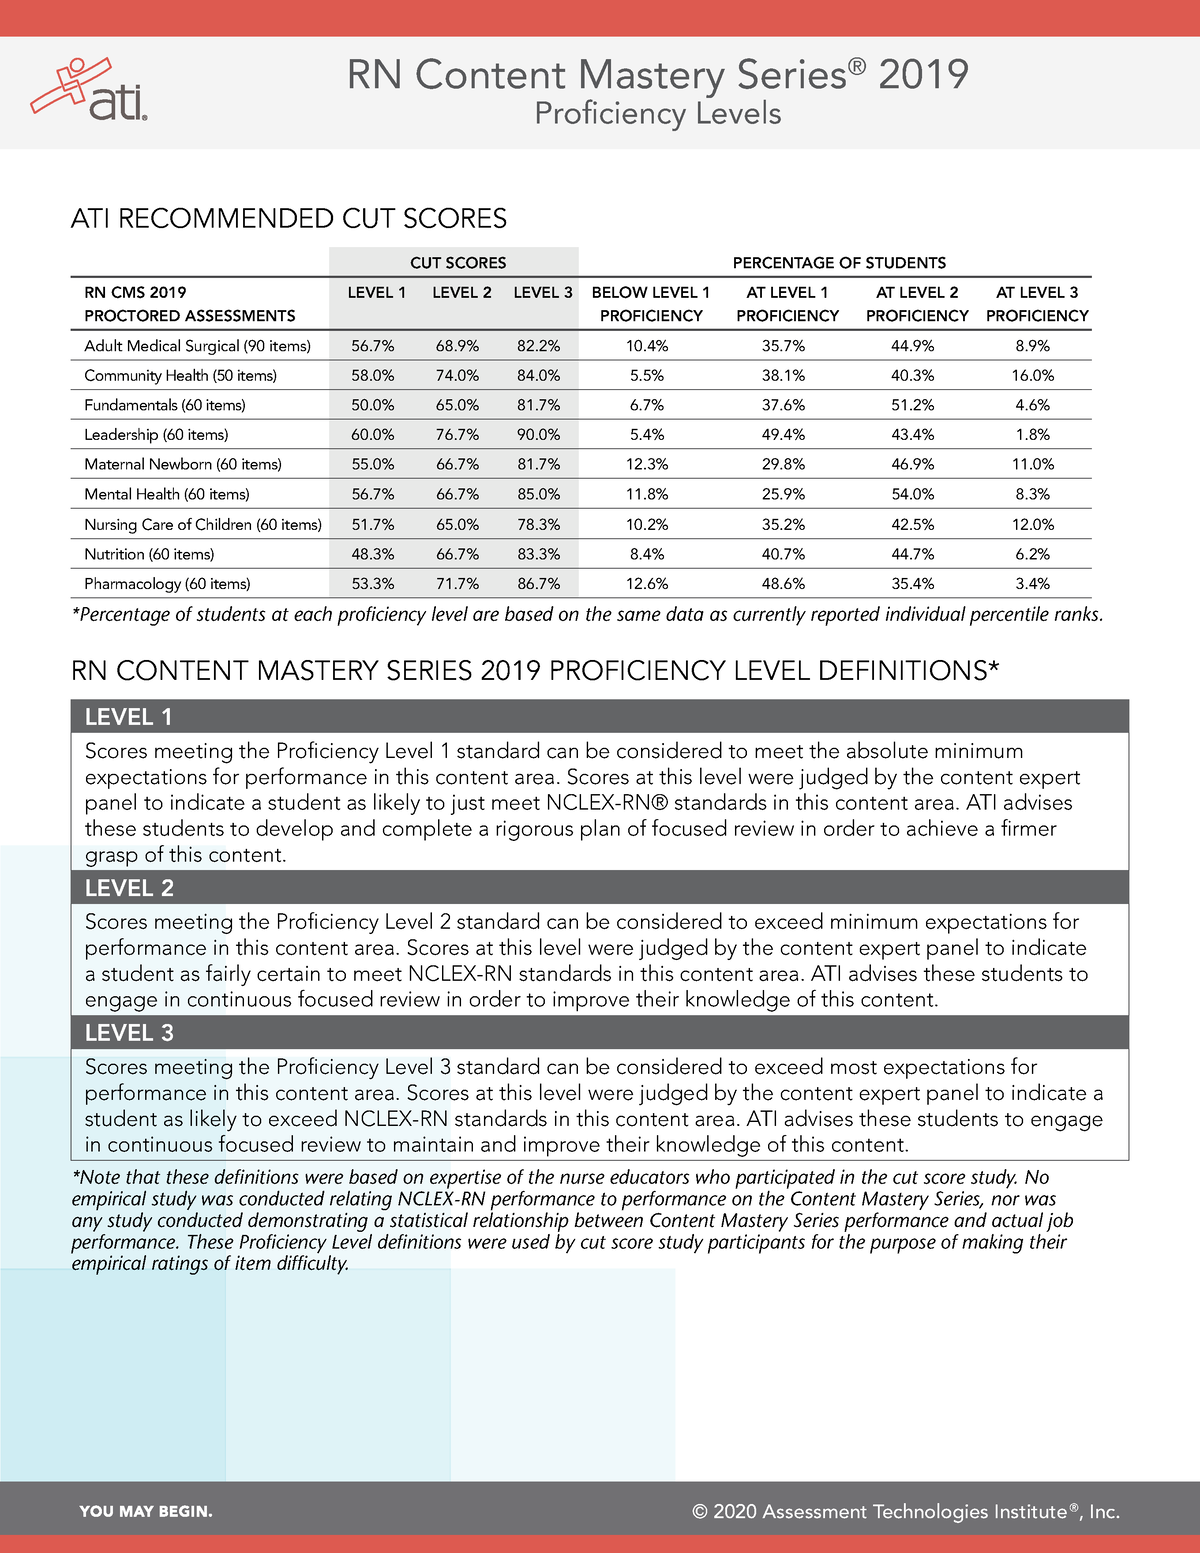 ATI cut scores for grading © 2020 Assessment Technologies Institute